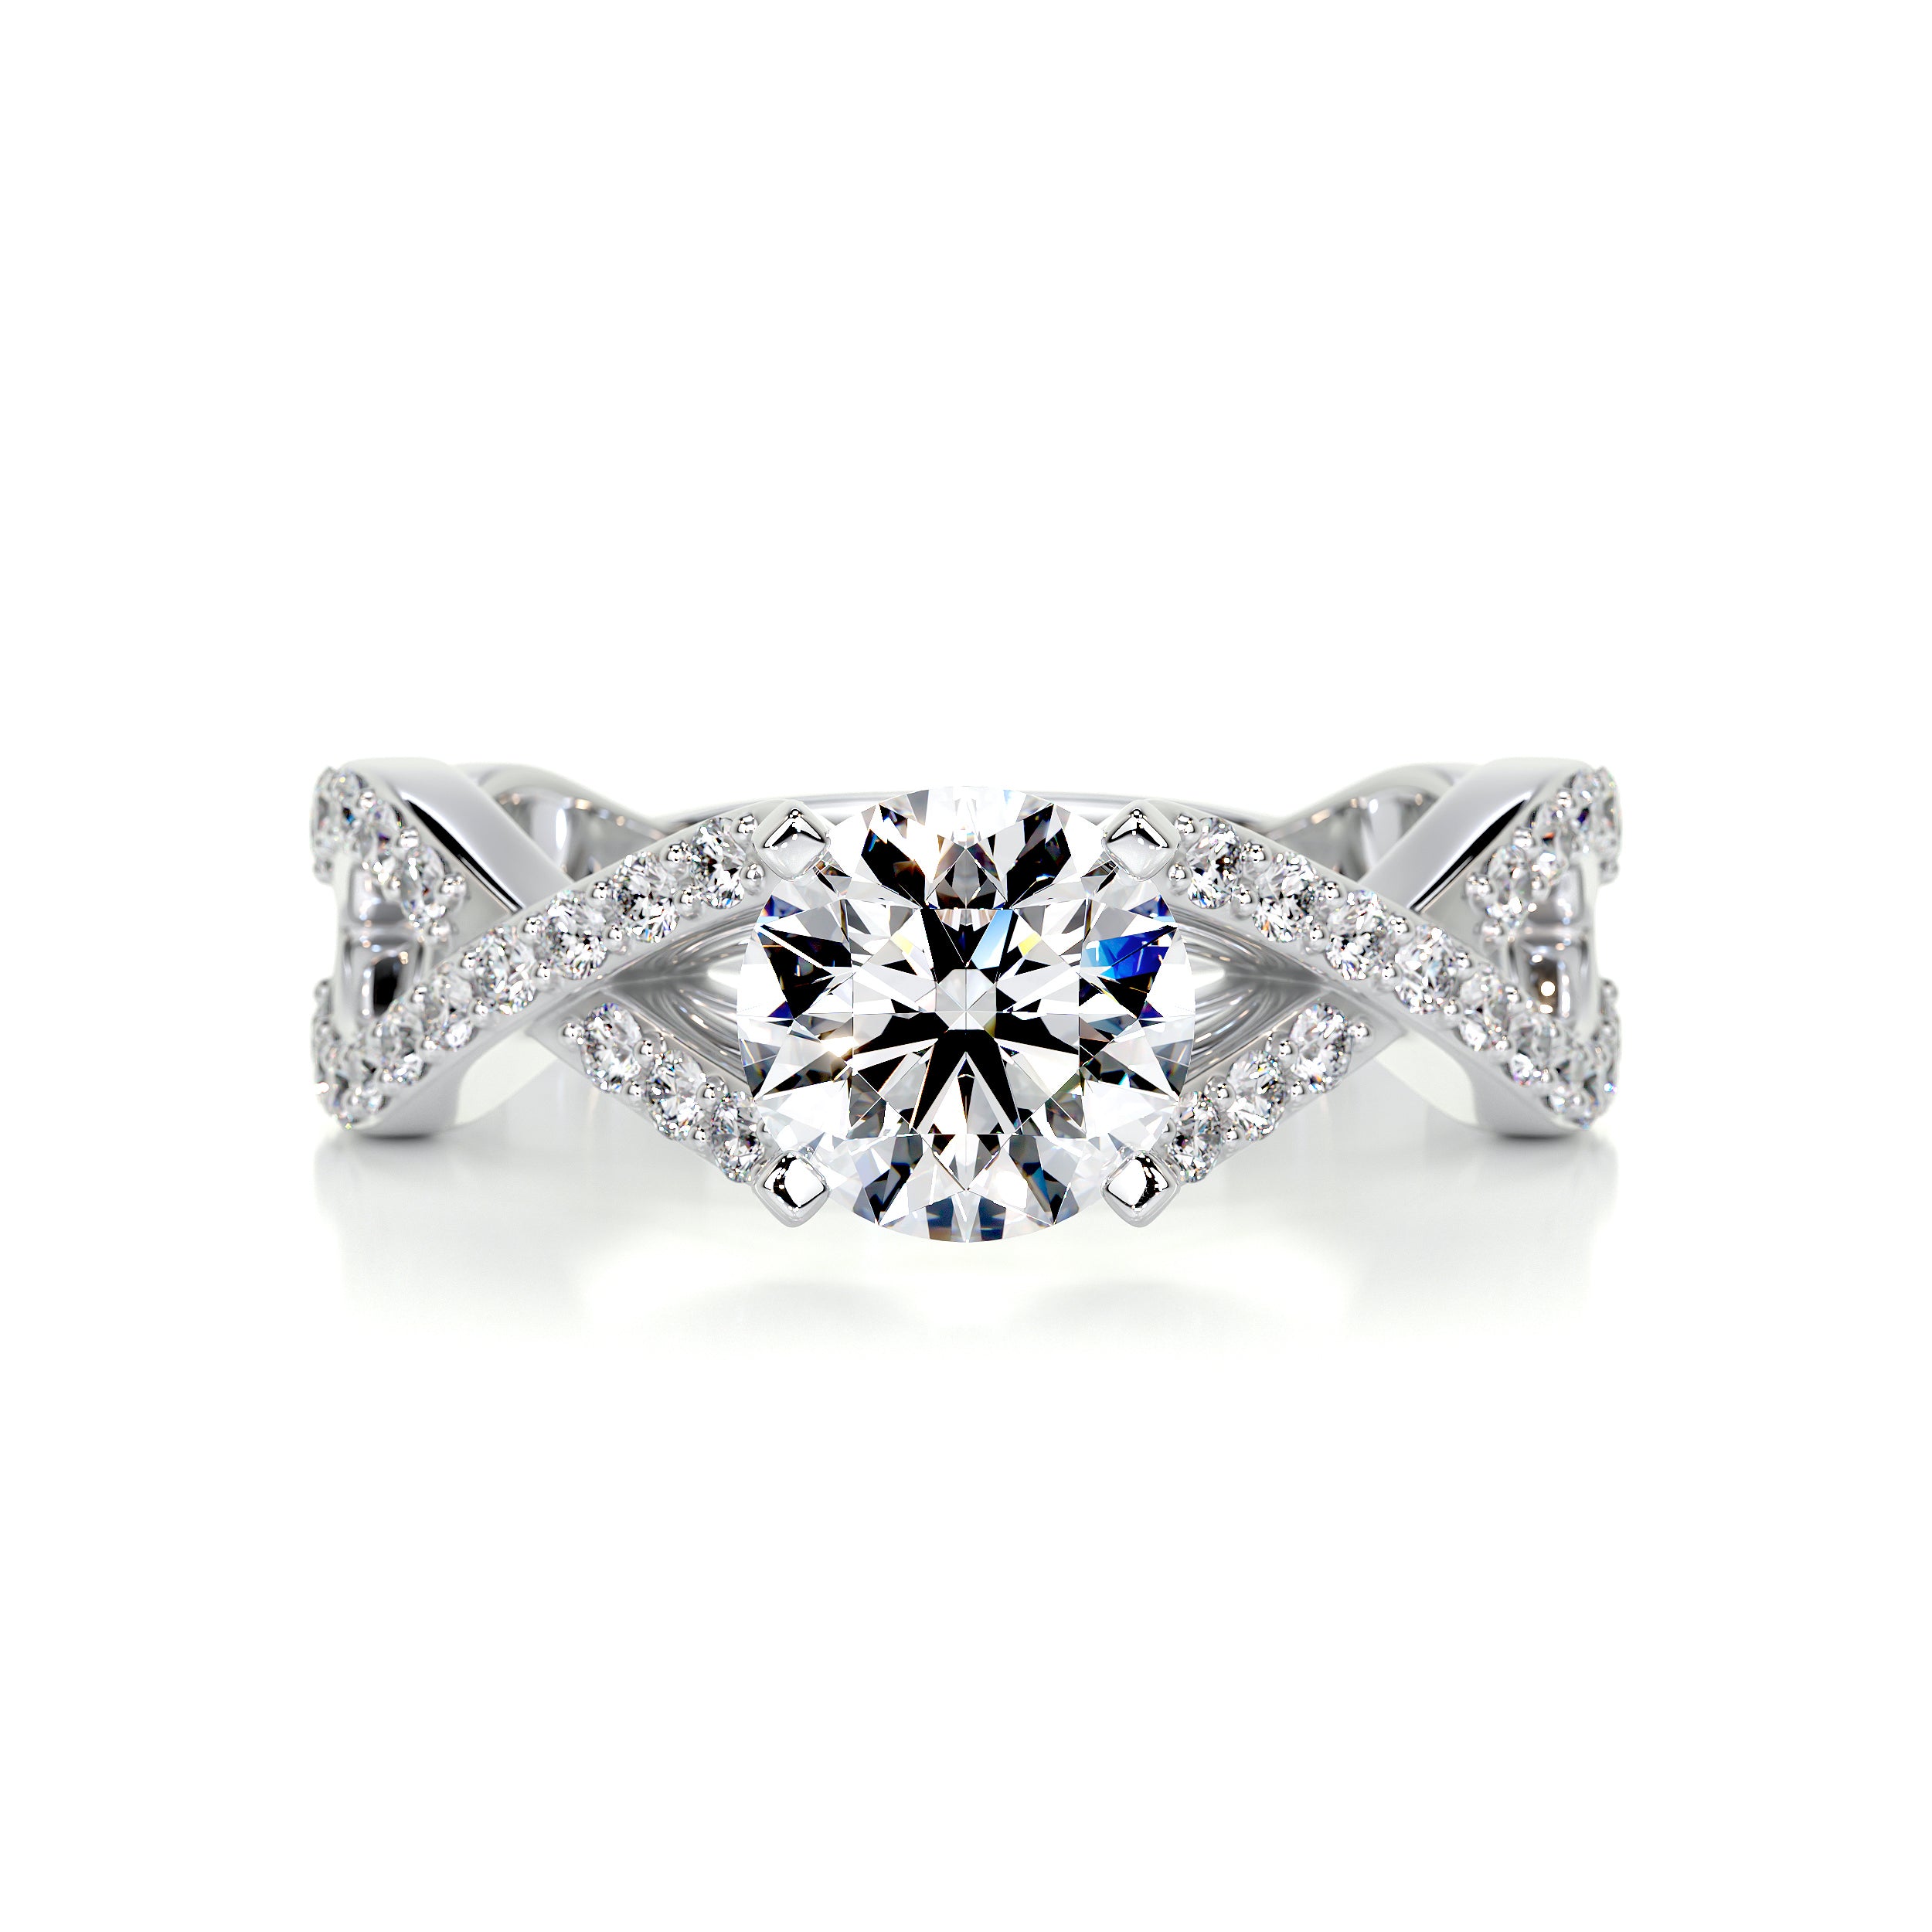 Emery Diamond Engagement Ring   (1.50 Carat) -18K White Gold